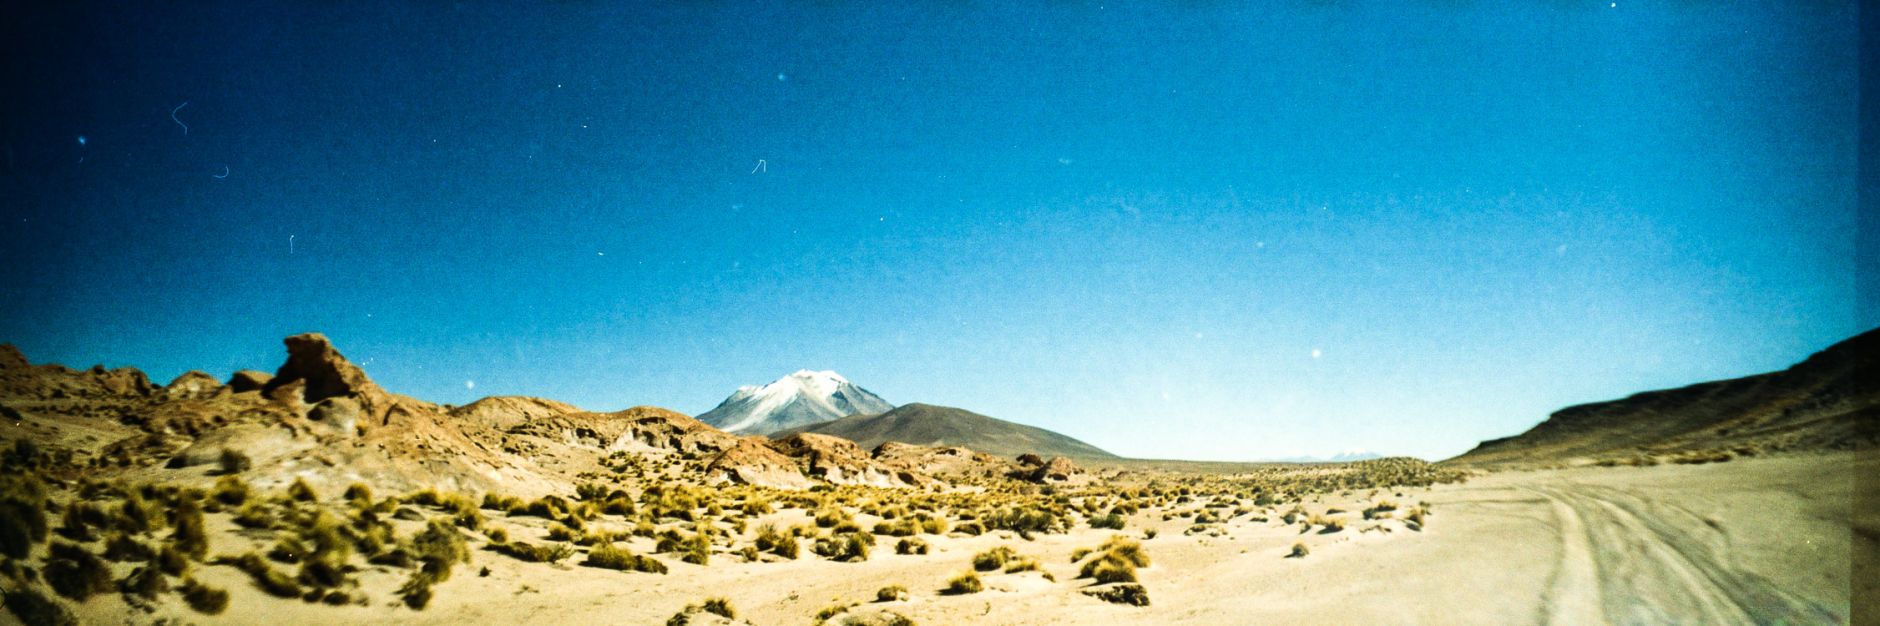 Désert Chuguana, Vocan Ollagüe, Bolivie